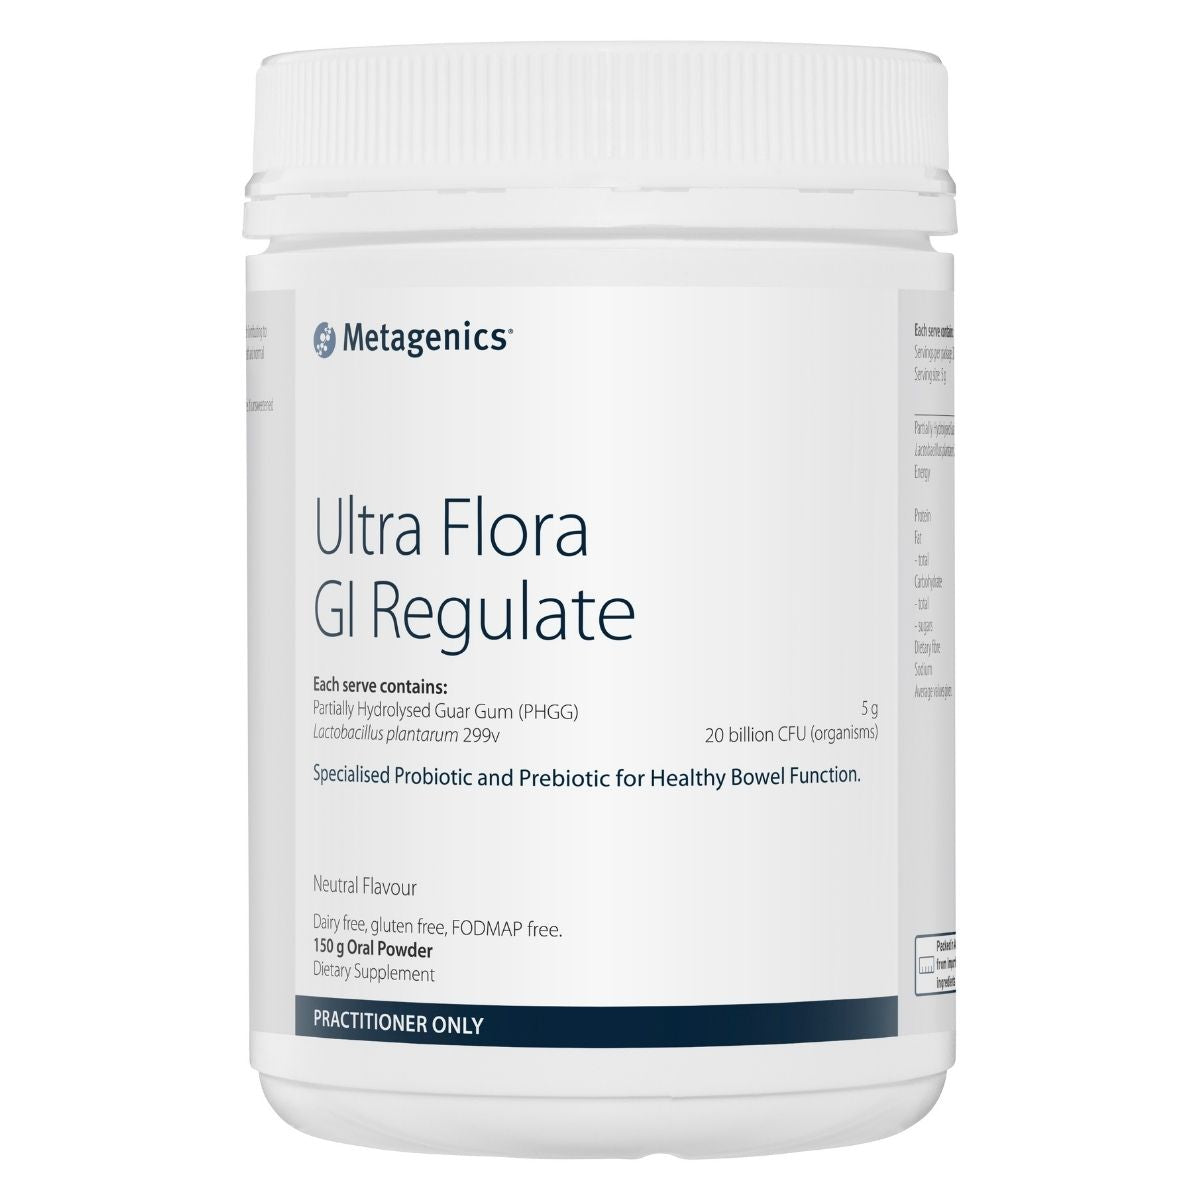 Metagenics Ultra Flora GI Regulate